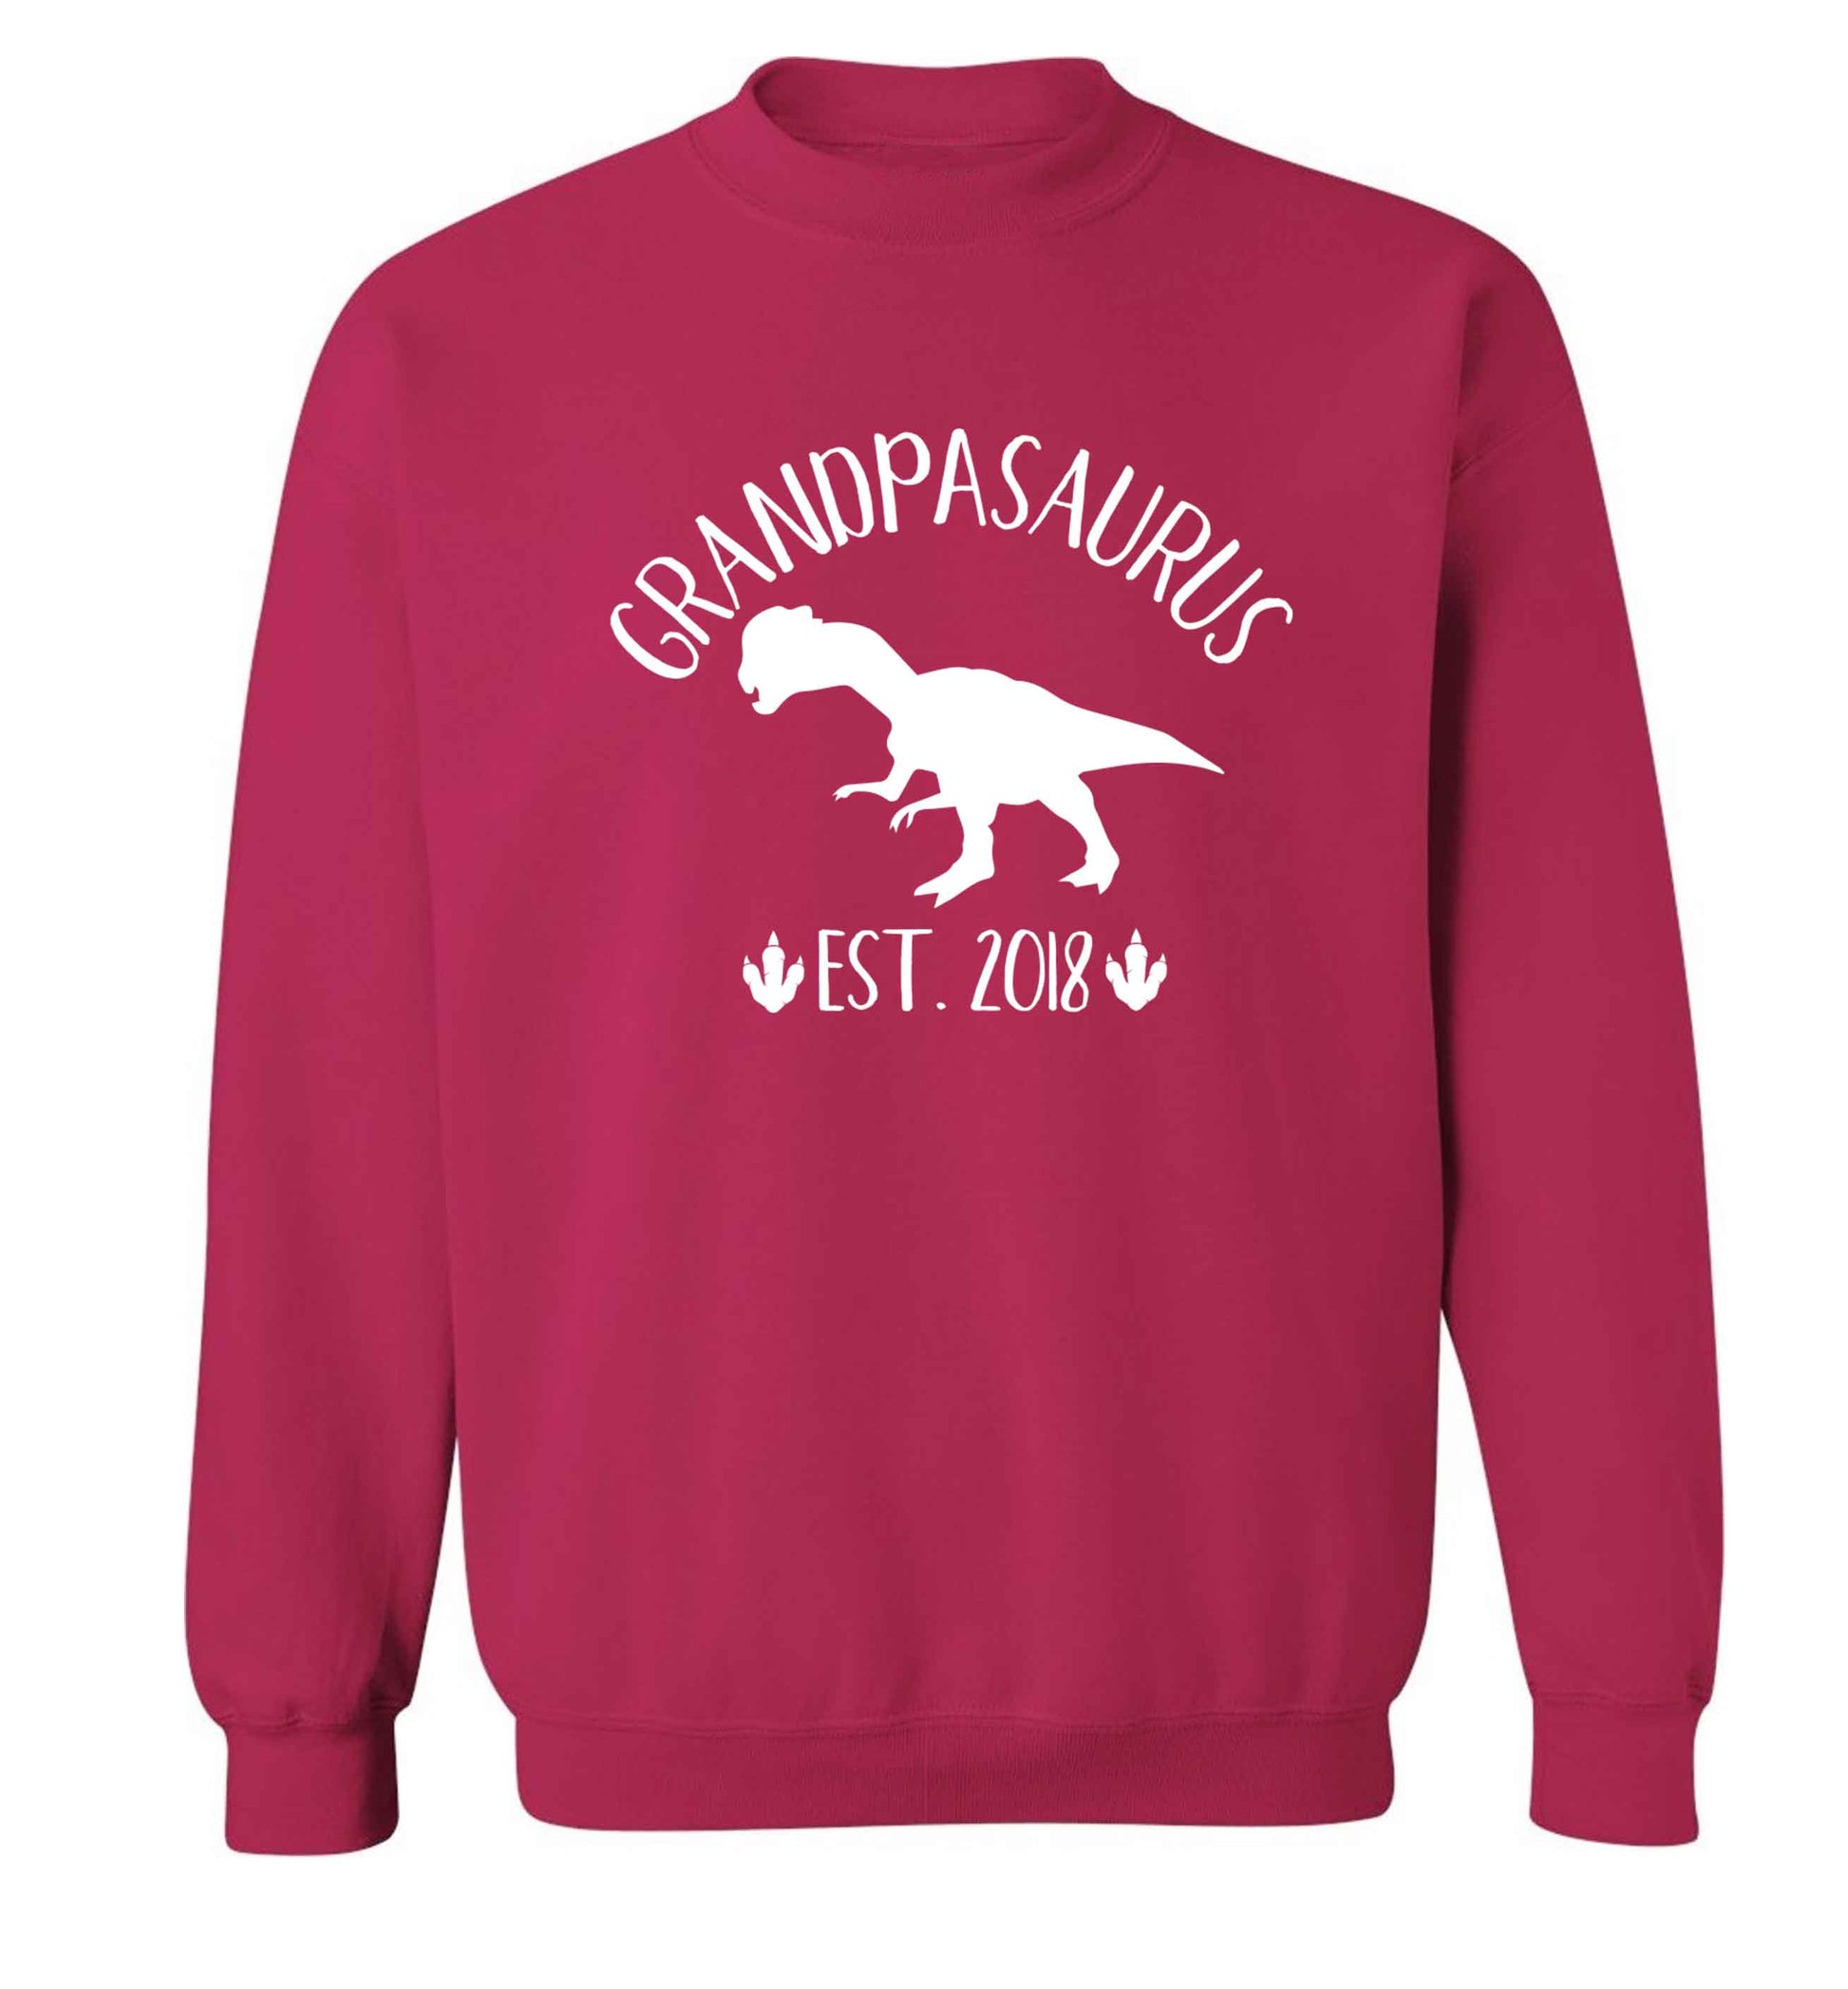 Personalised grandpasaurus since (custom date) Adult's unisex pink Sweater 2XL